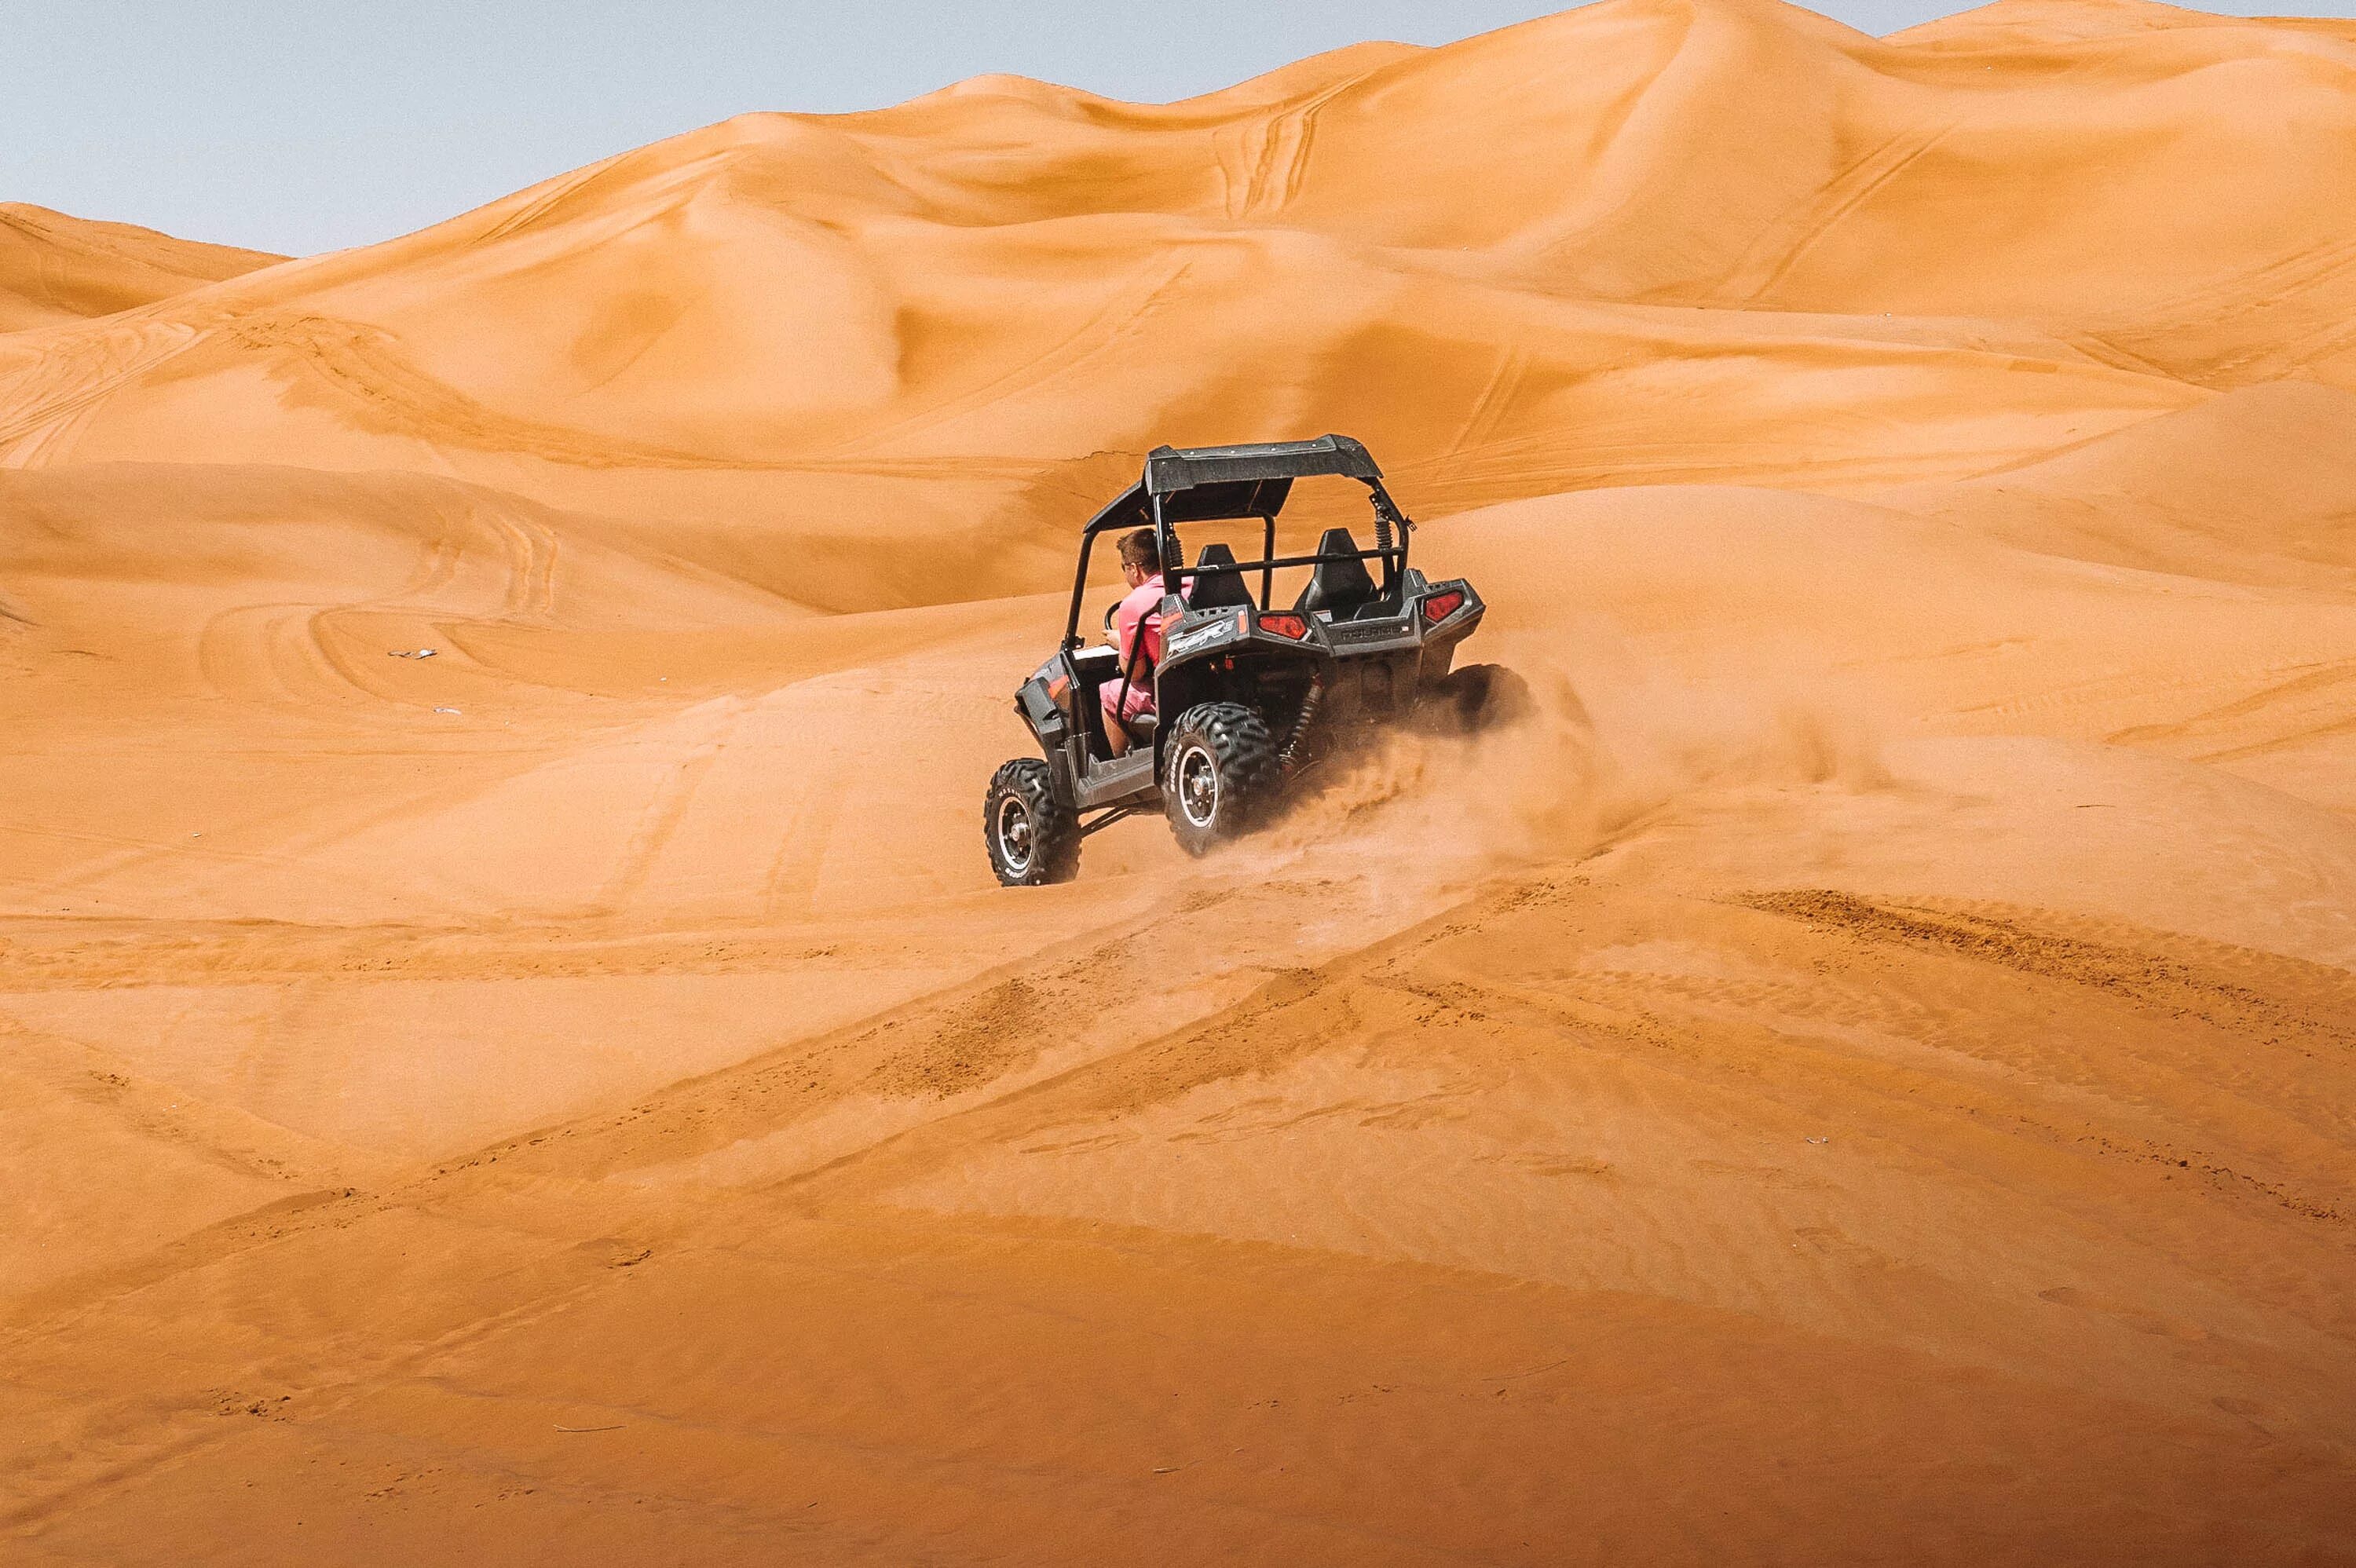 Пустыня ездить. Багги в пустыне Шарм Эль Шейх. Сафари на квадроциклах в Дубае. Багги сафари Дубай. Пустыня руб-Эль-Хали.